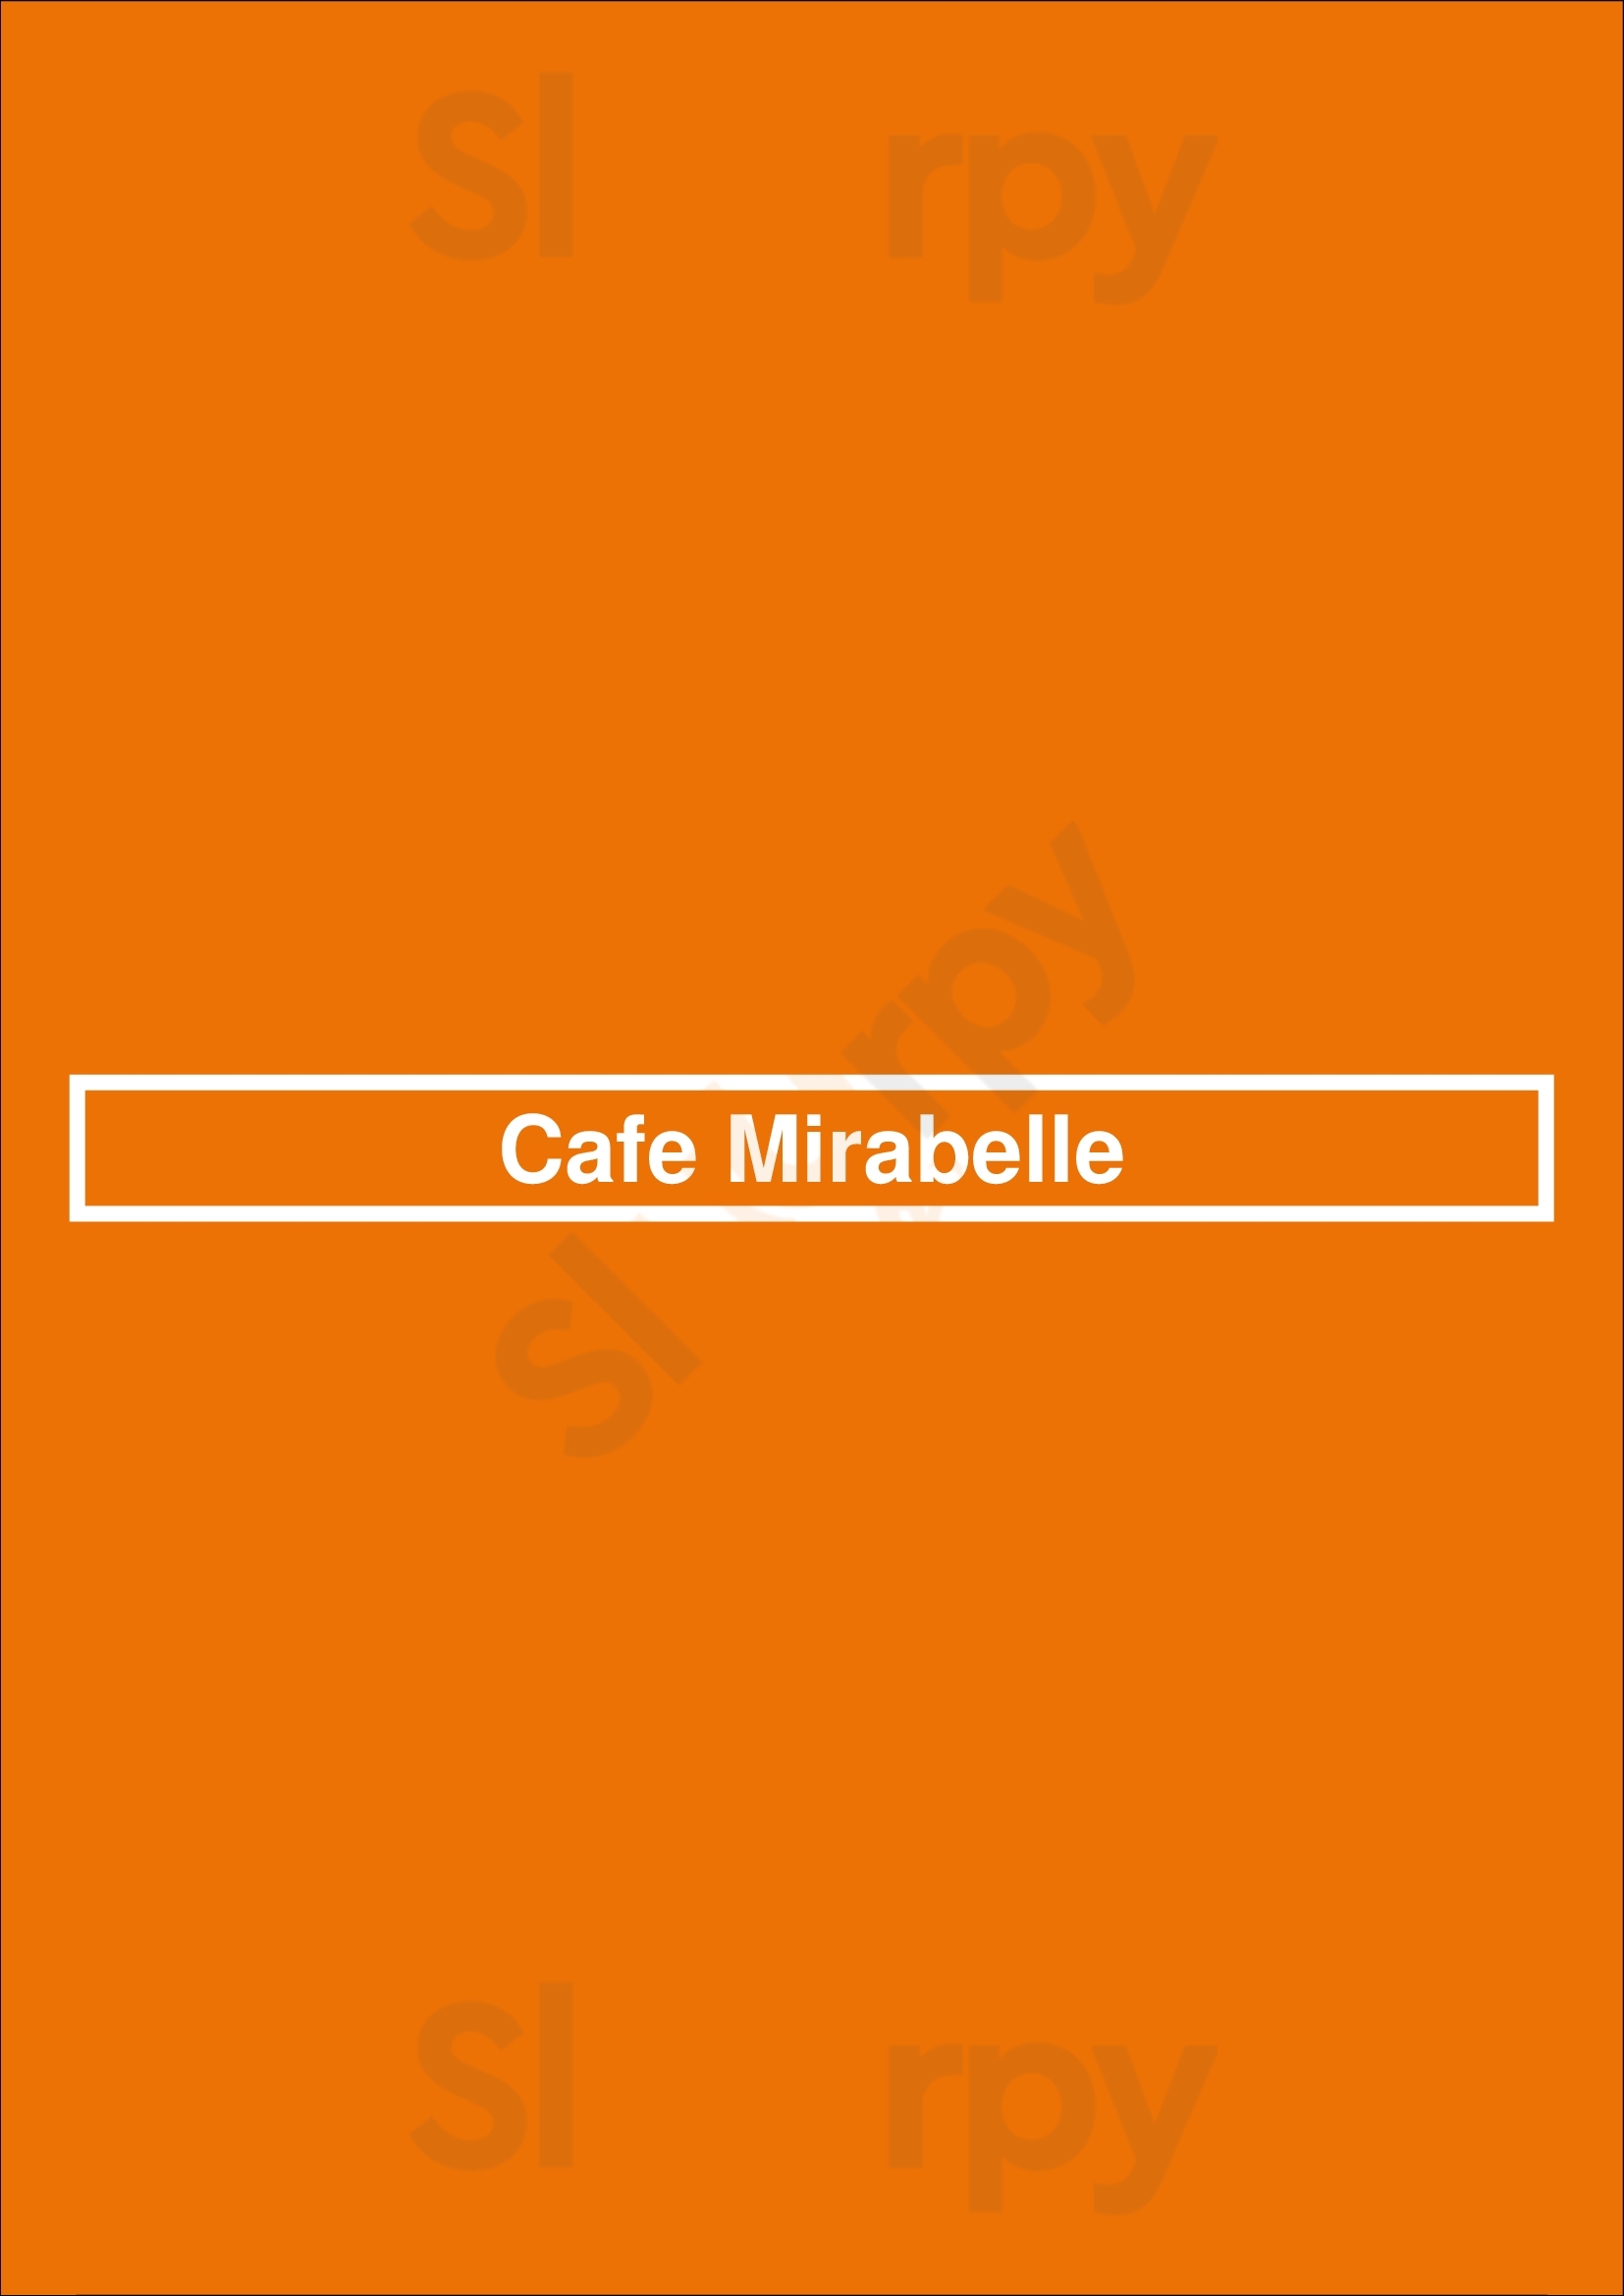 Cafe Mirabelle Berlin Menu - 1